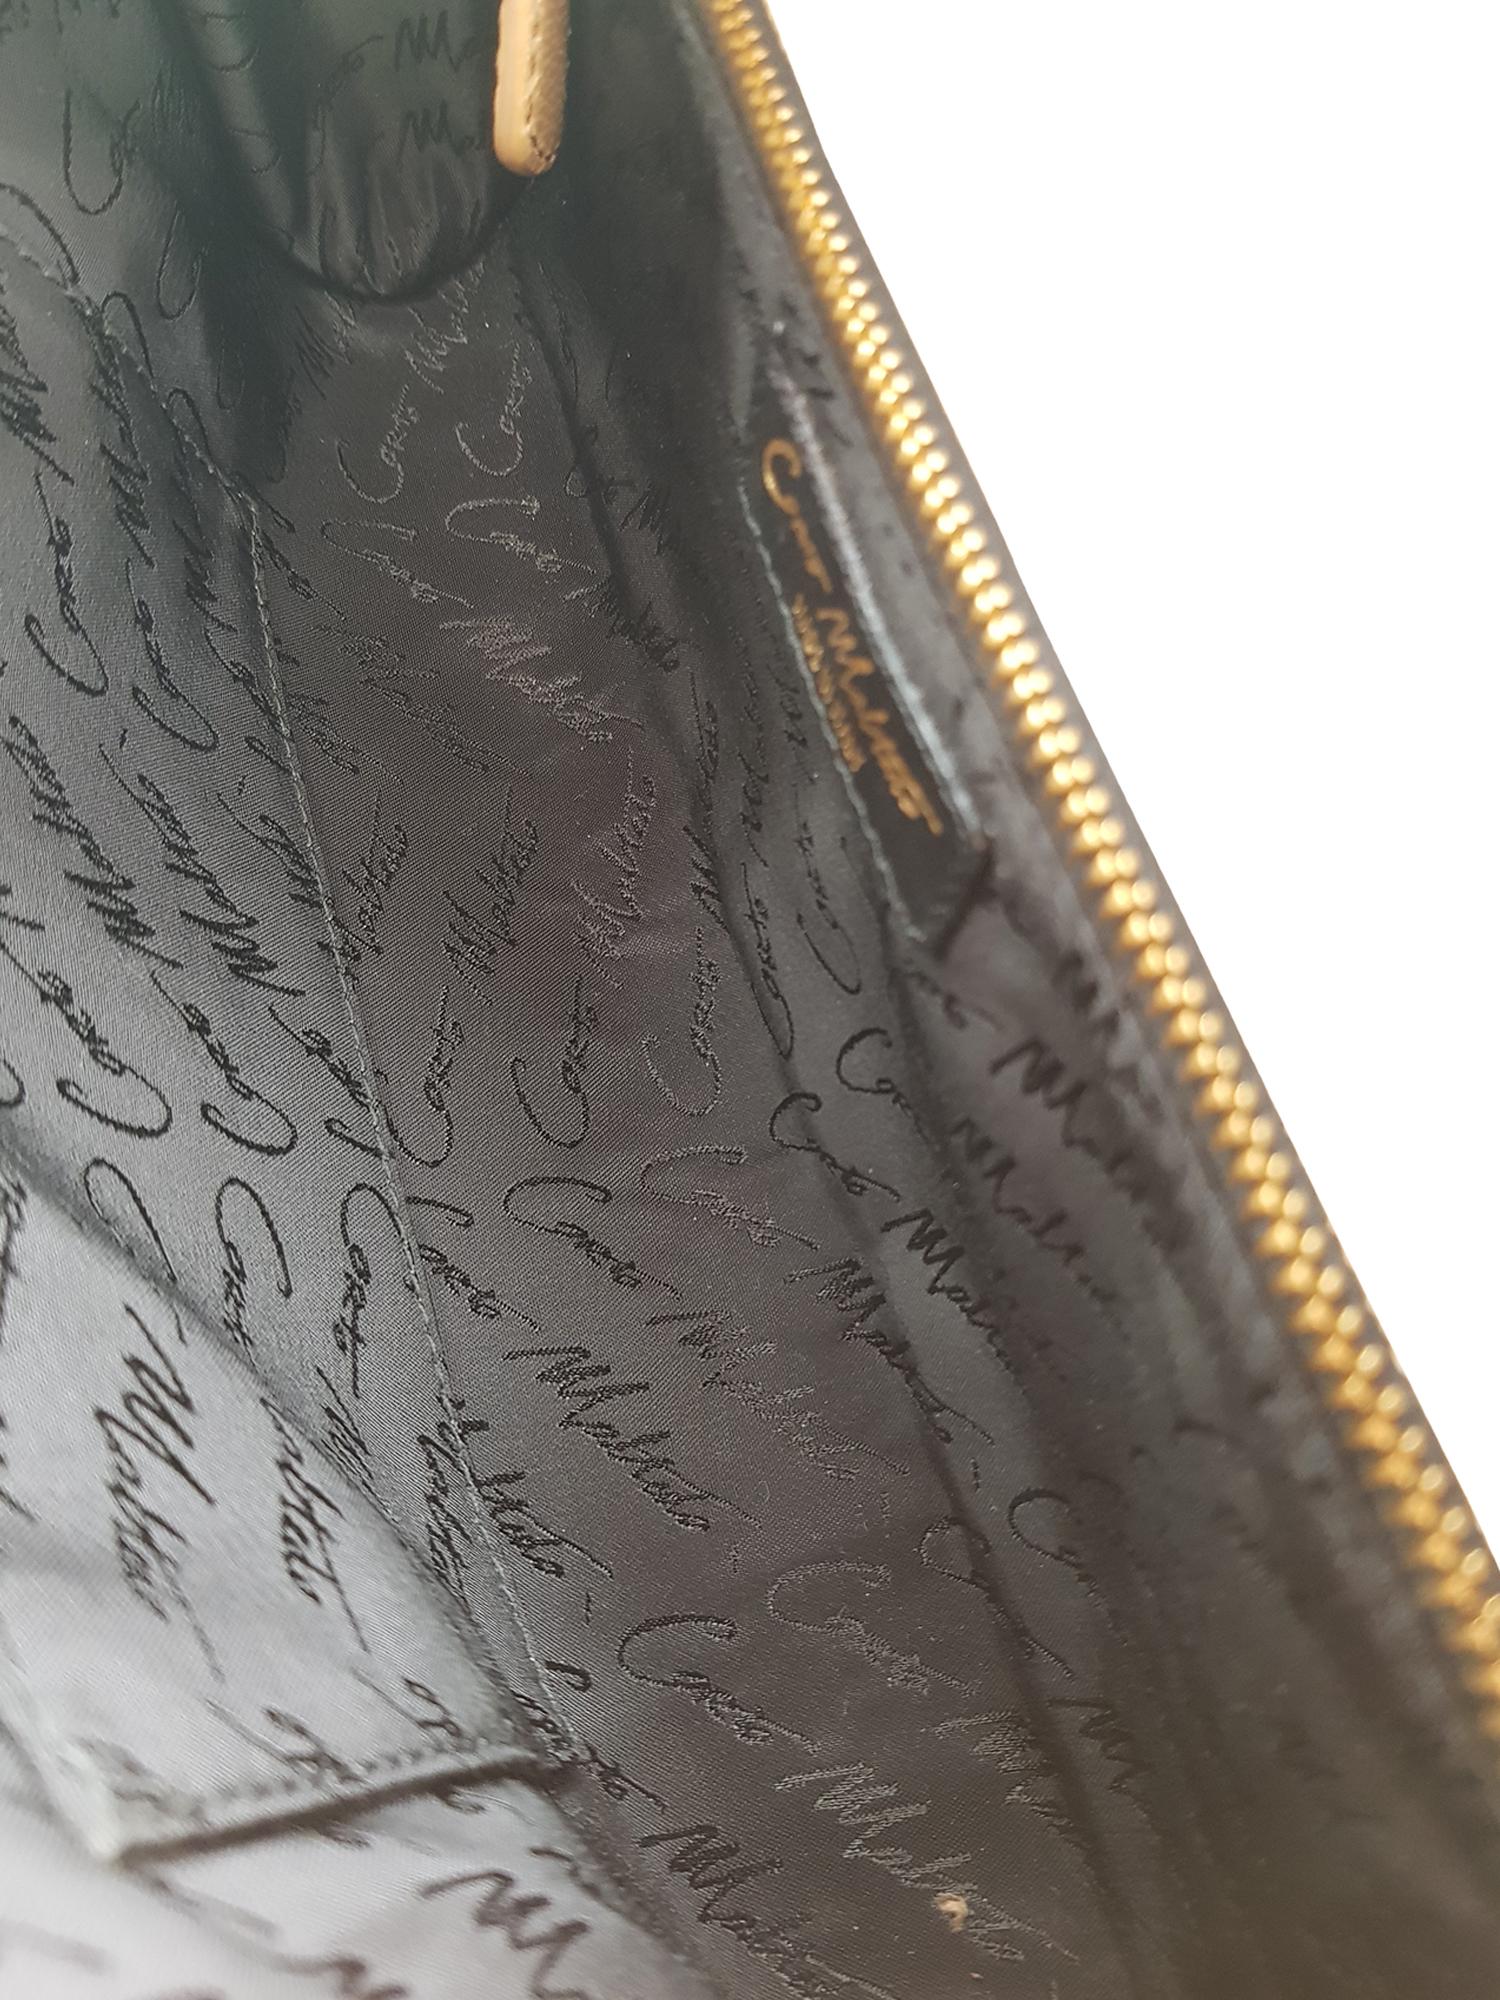 Corto Moltedo Woman Shoulder bag Beige Leather For Sale 2